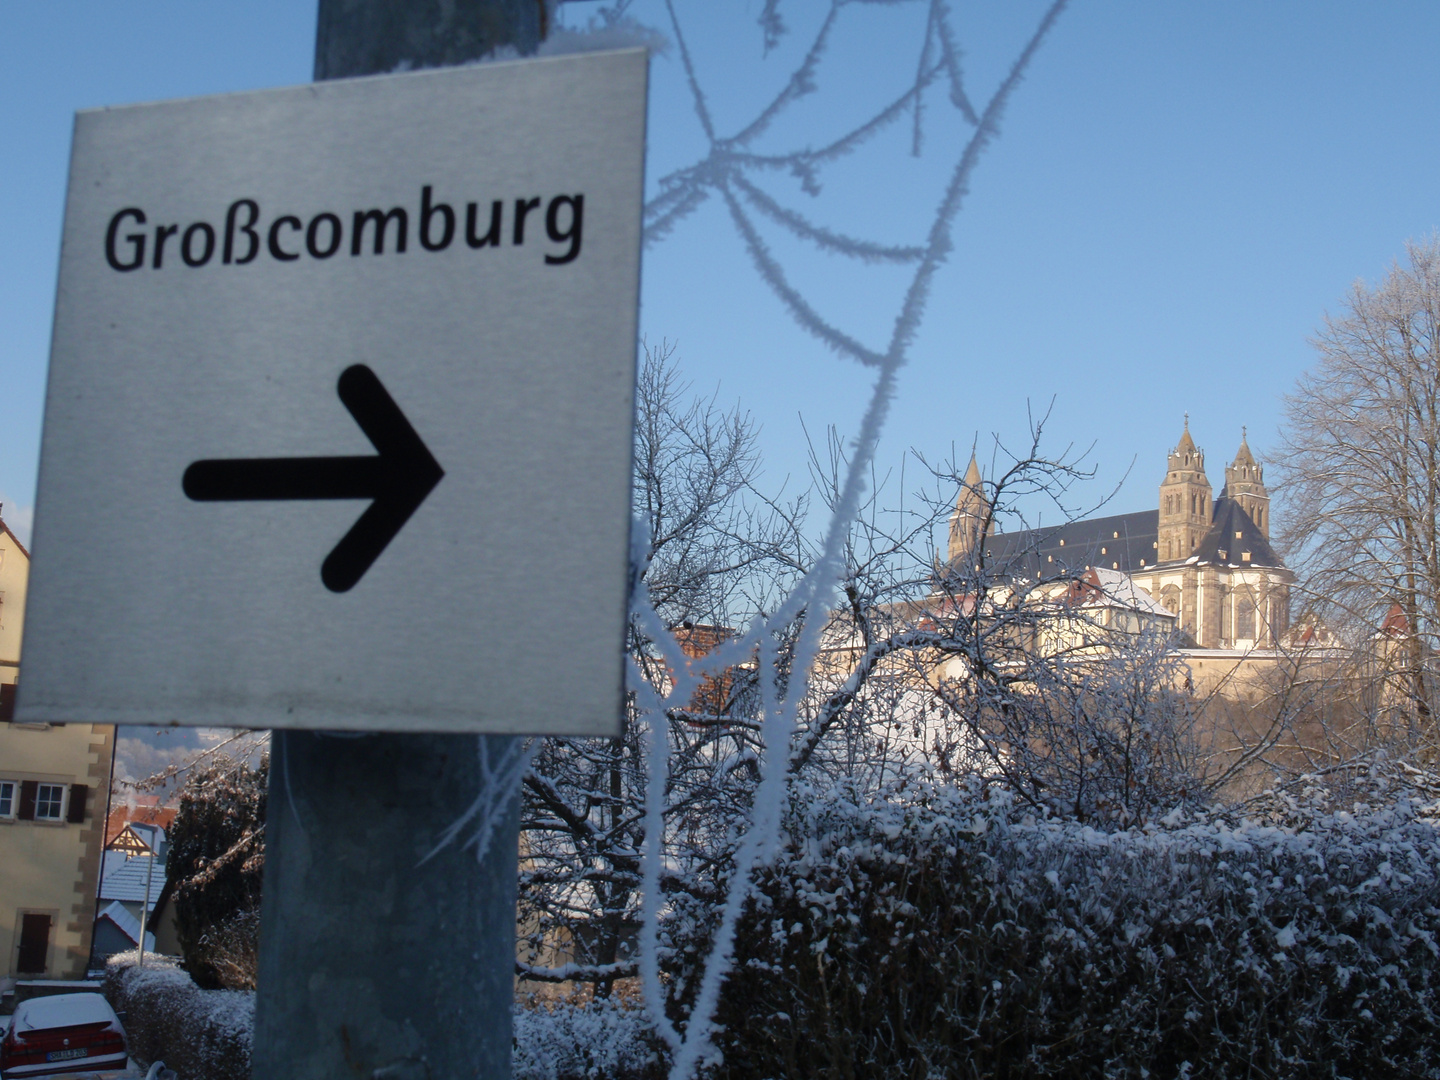 Großcomburg